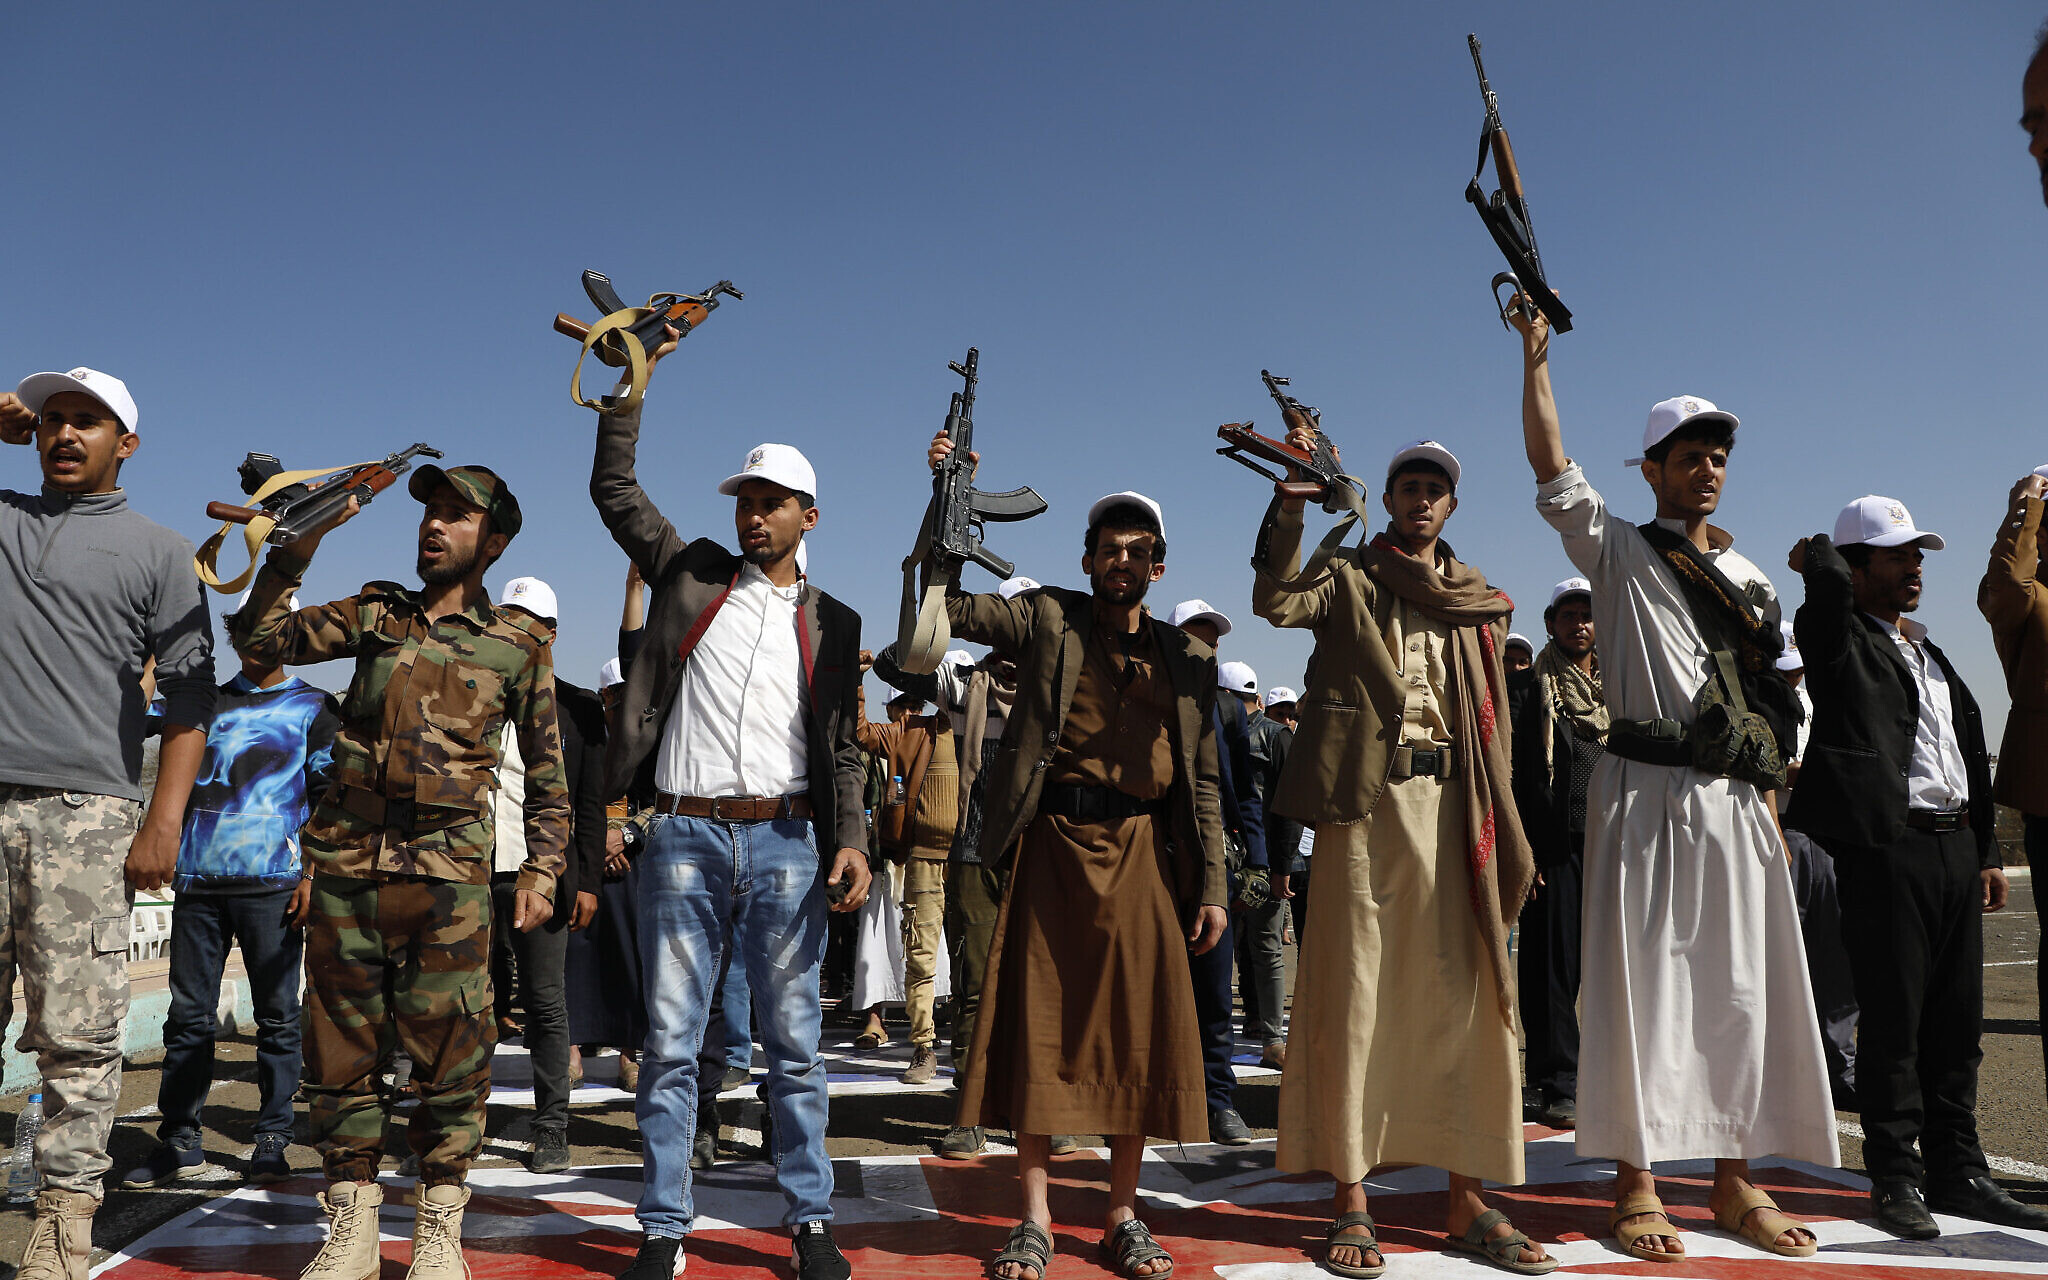 Houthi strikes escalate tensions, impacting global maritime navigation (Credits: AP Photo)